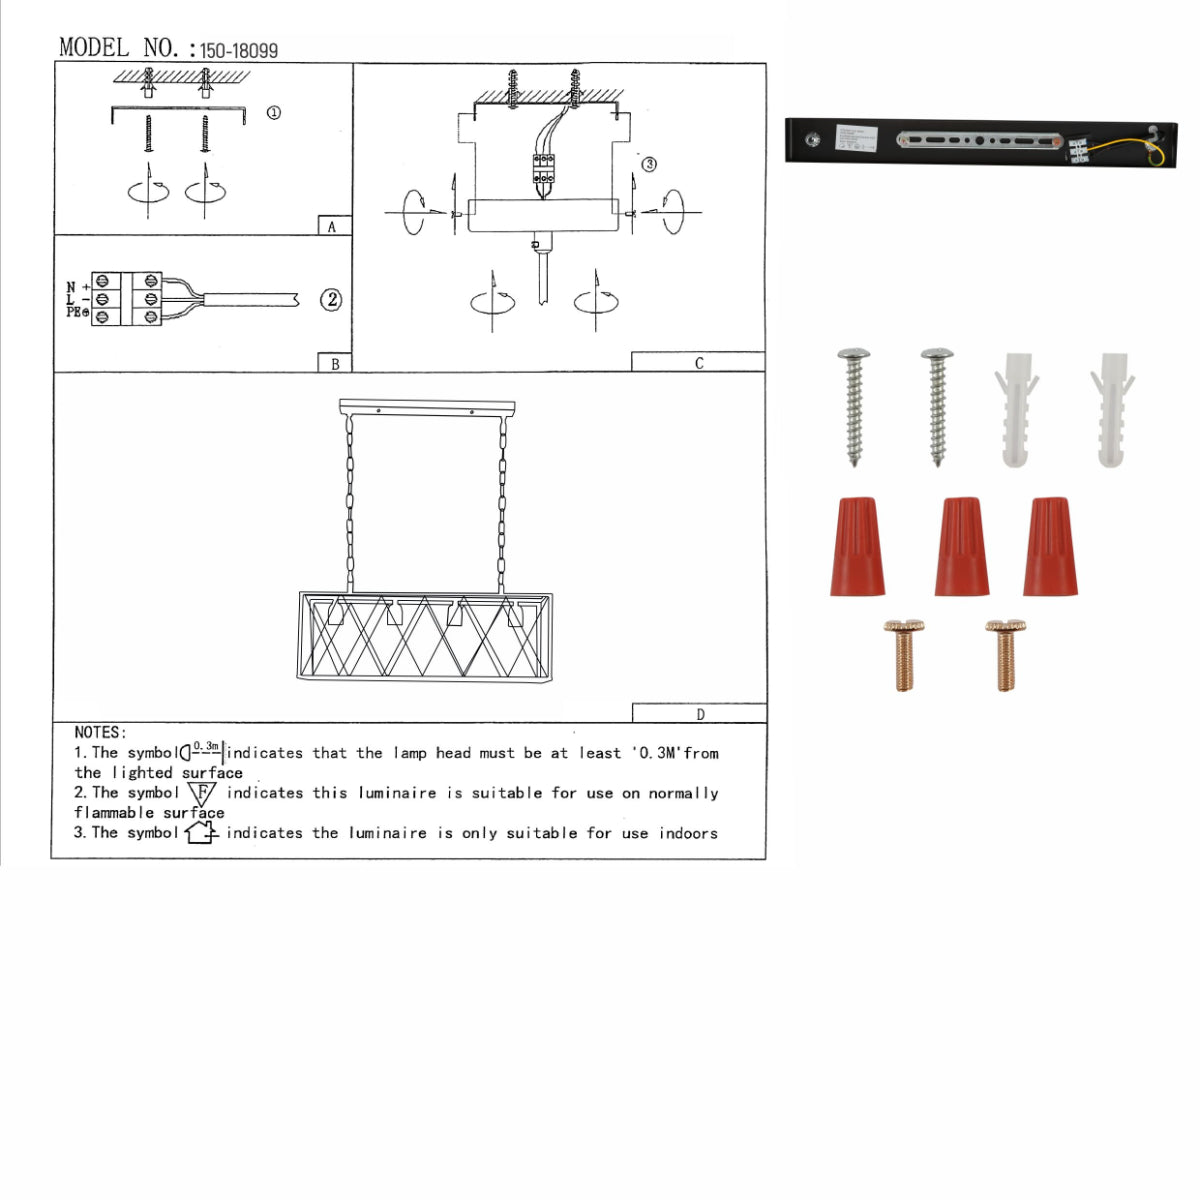 User manual for Black Cuboid Metal Kitchen Island Chandelier Ceiling Light with 4xE27 | TEKLED 150-18099